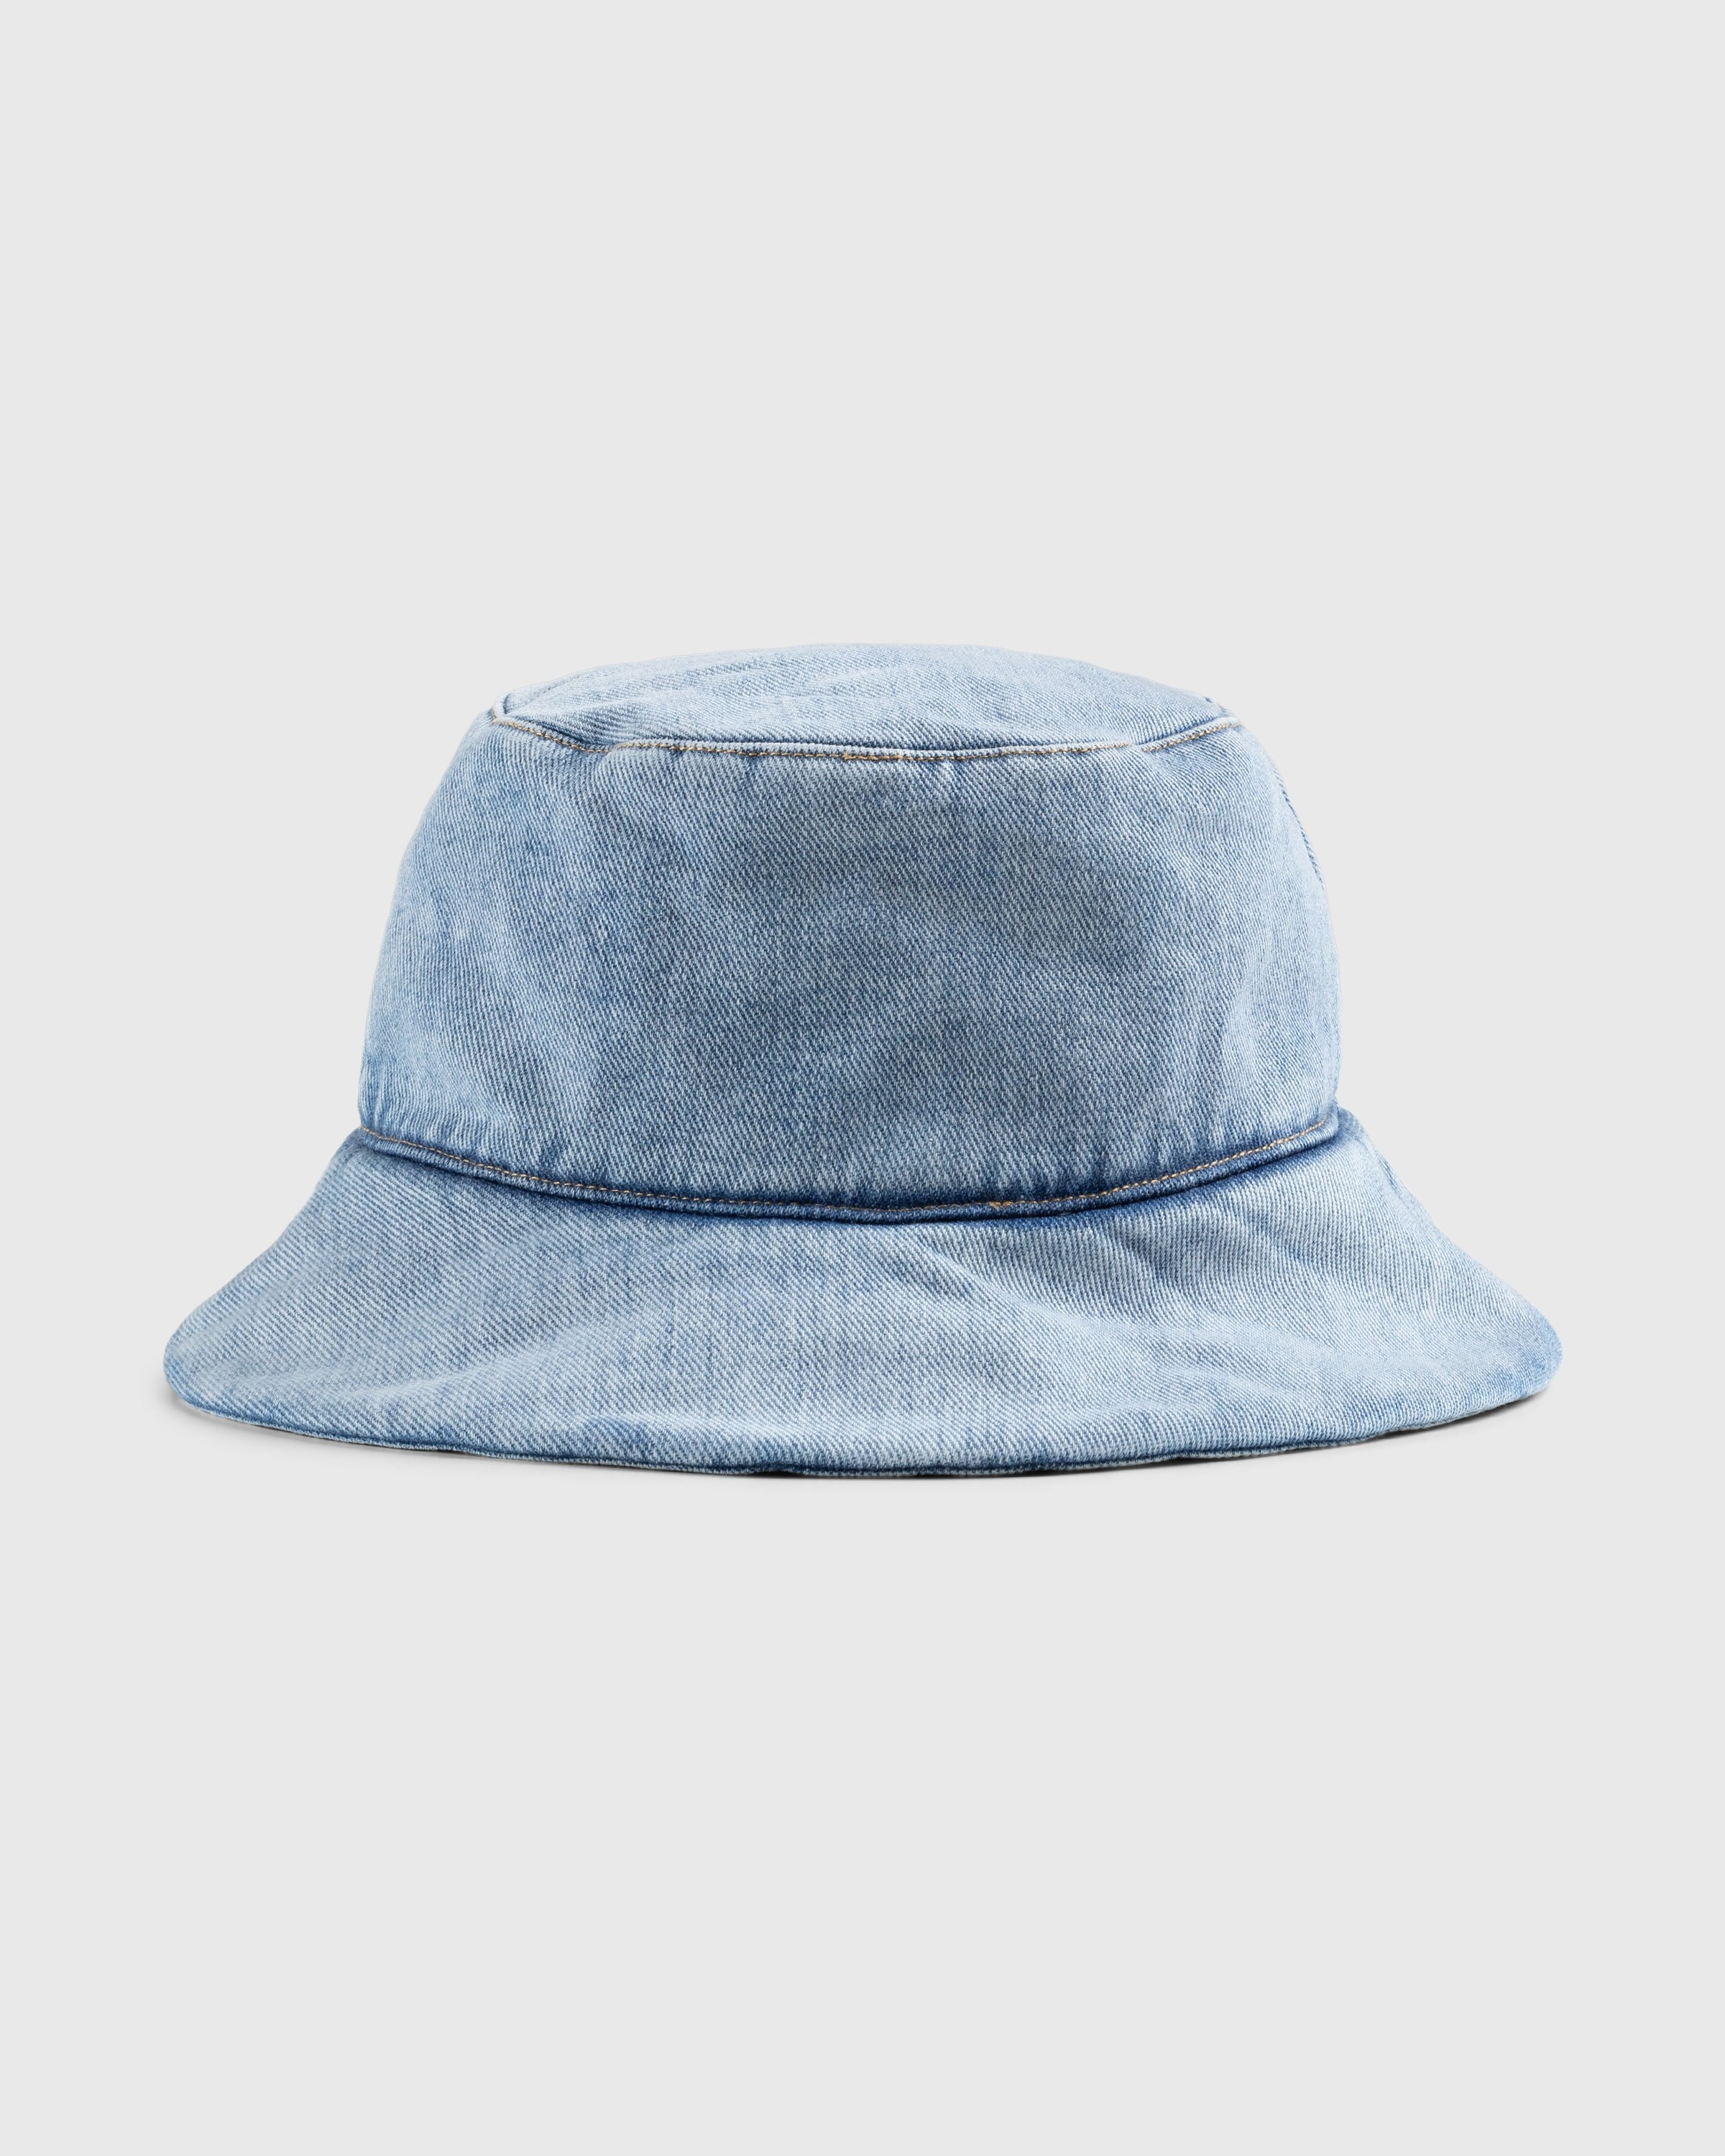 Acne Studios – Padded Denim Bucket Hat Blue  - Hats - Blue - Image 2